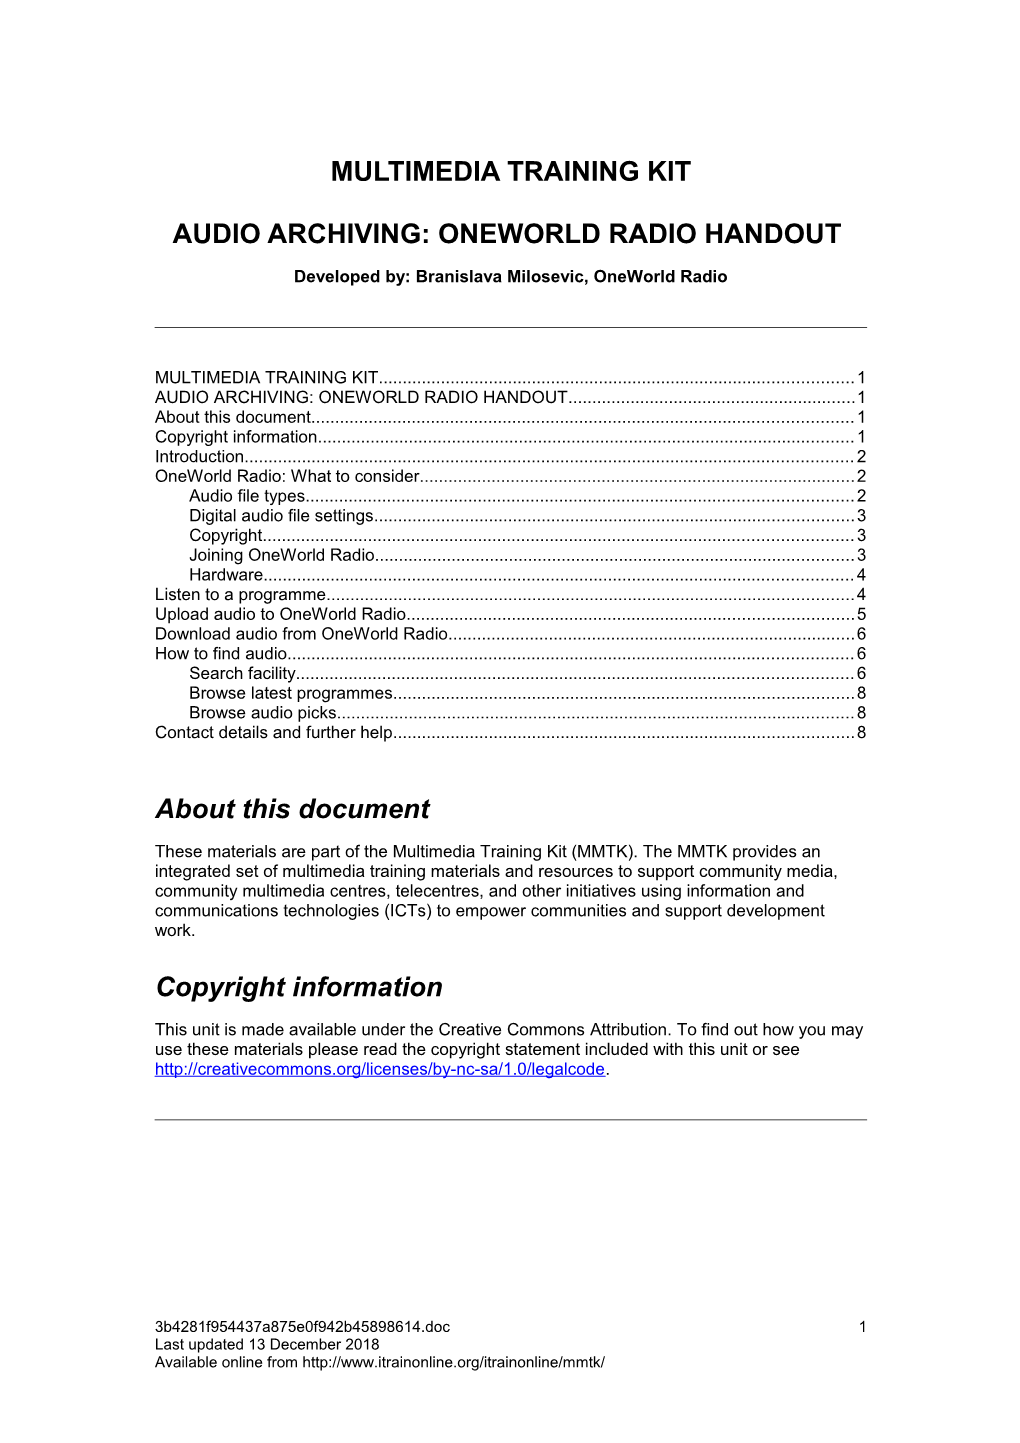 Audio Archiving: Oneworld Radio Handout